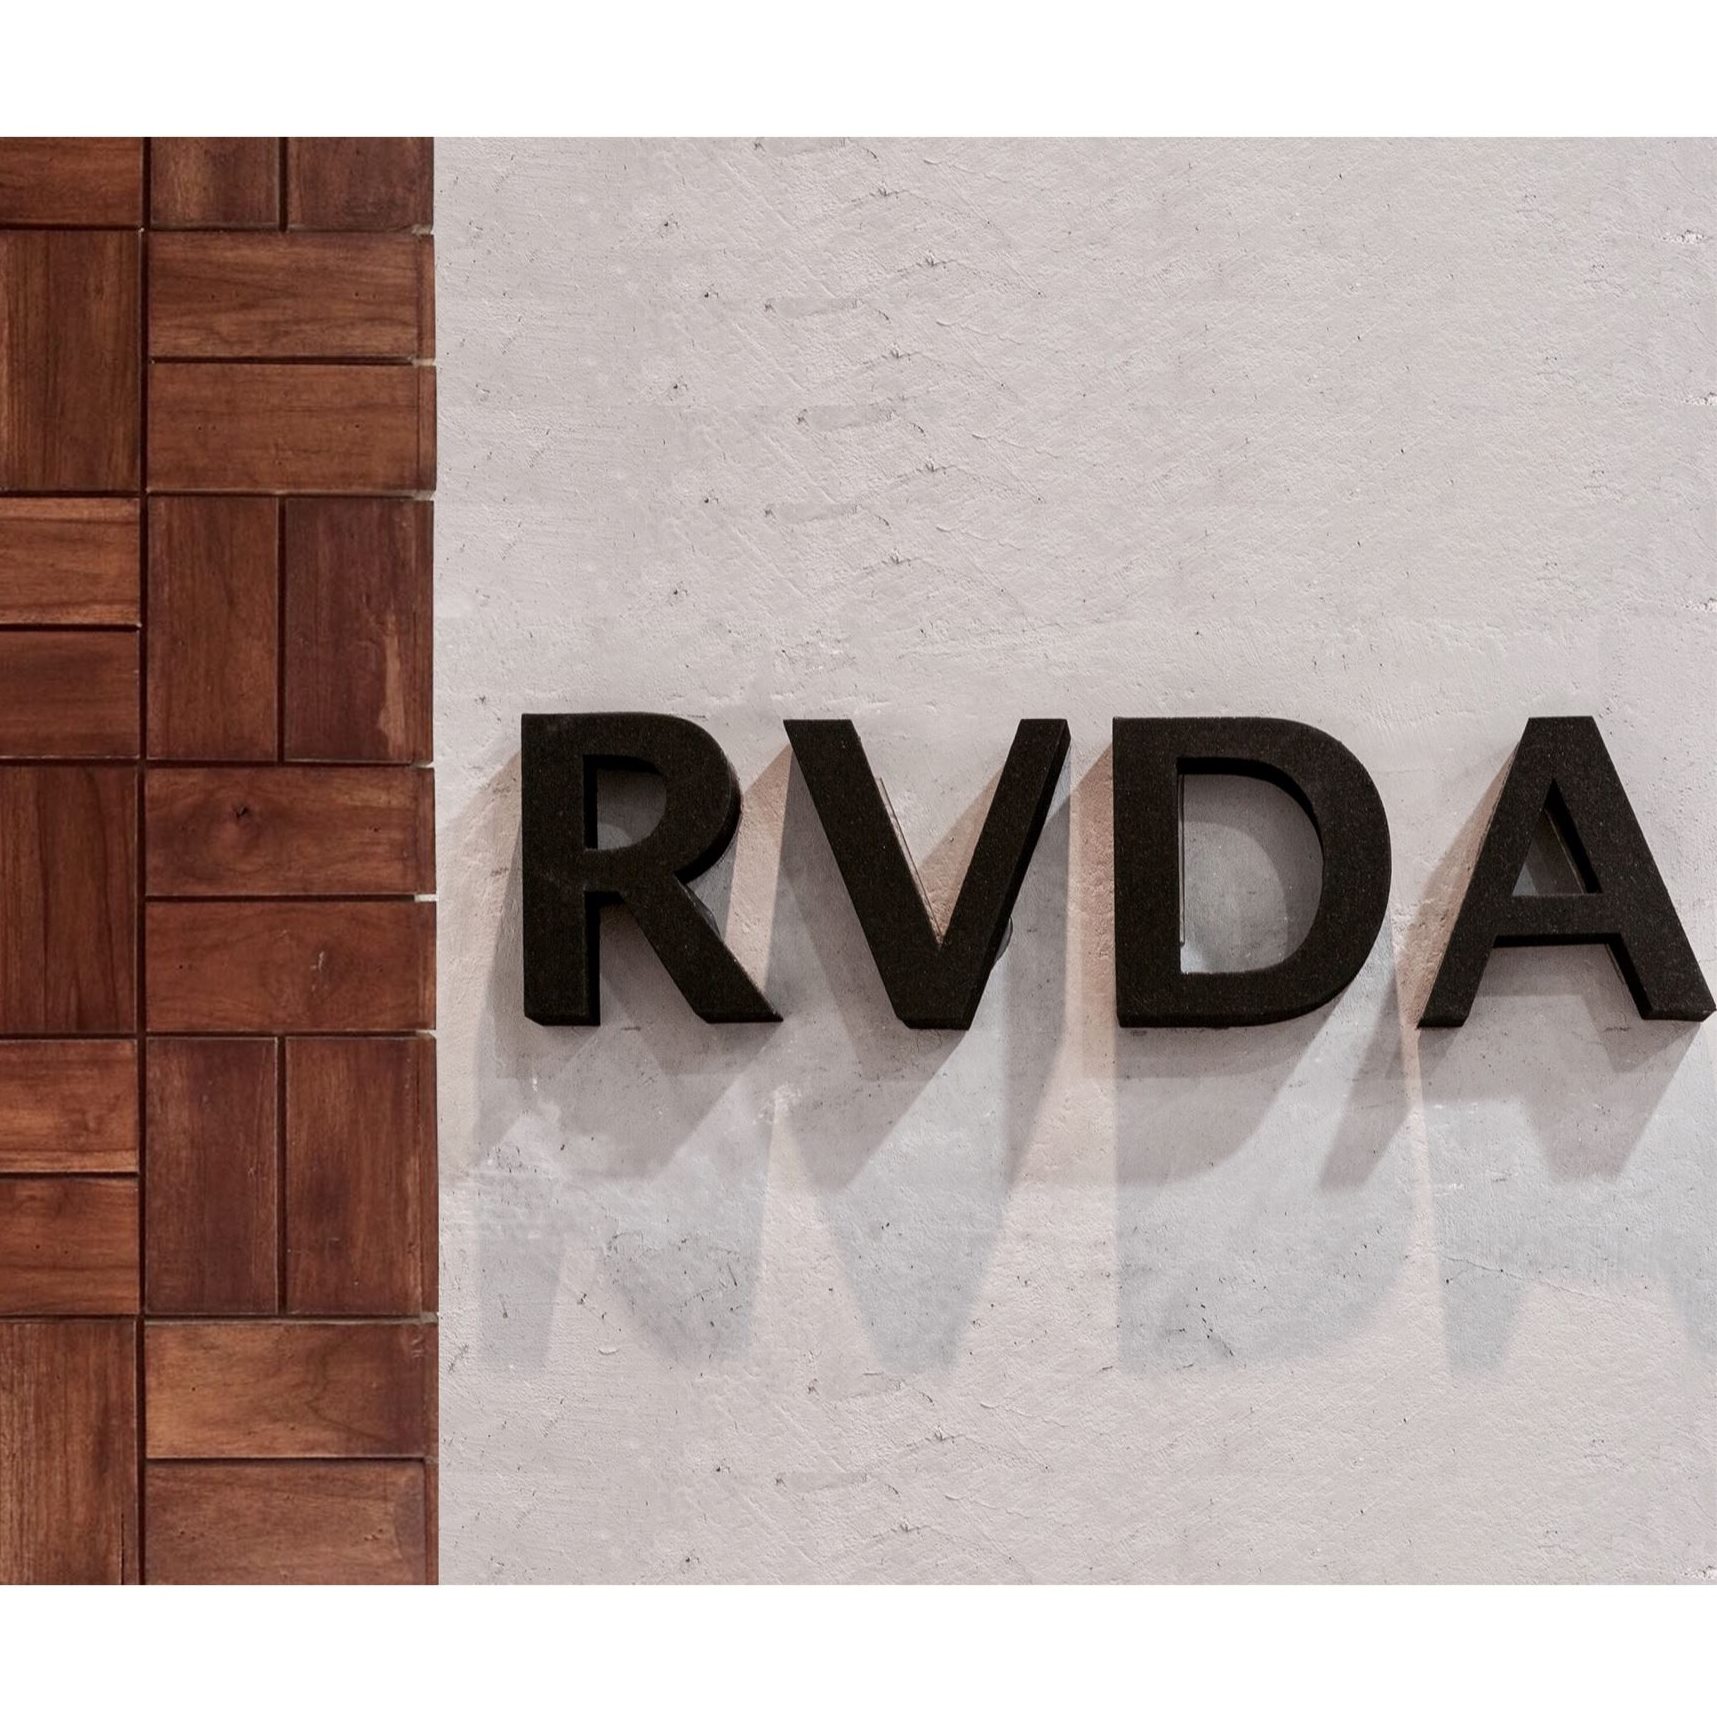 RVDA|Architect|Professional Services